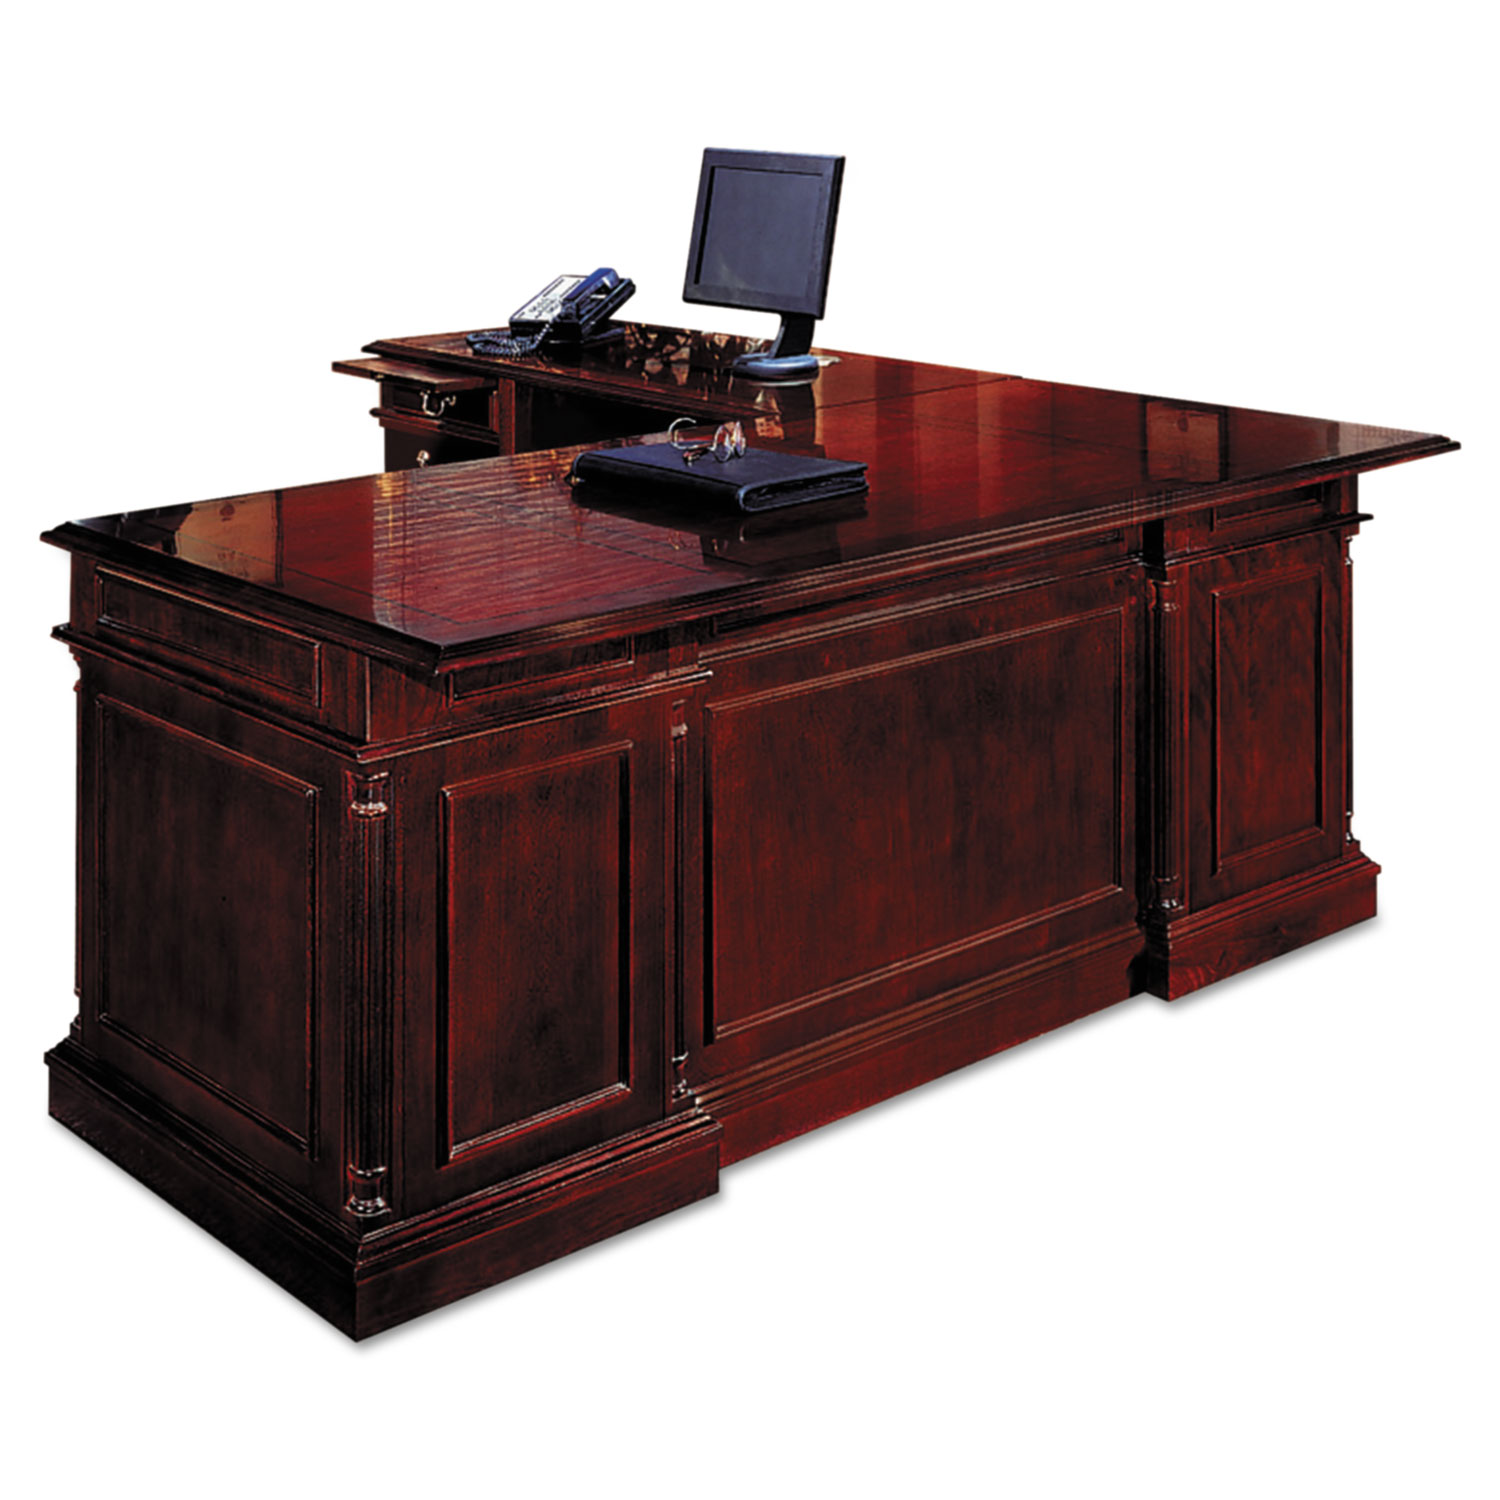  DMi Furniture 40079900580 Keswick Collection Right Pedestal Desk, 72w x 36d x 30h, Cherry (DMI7990580) 